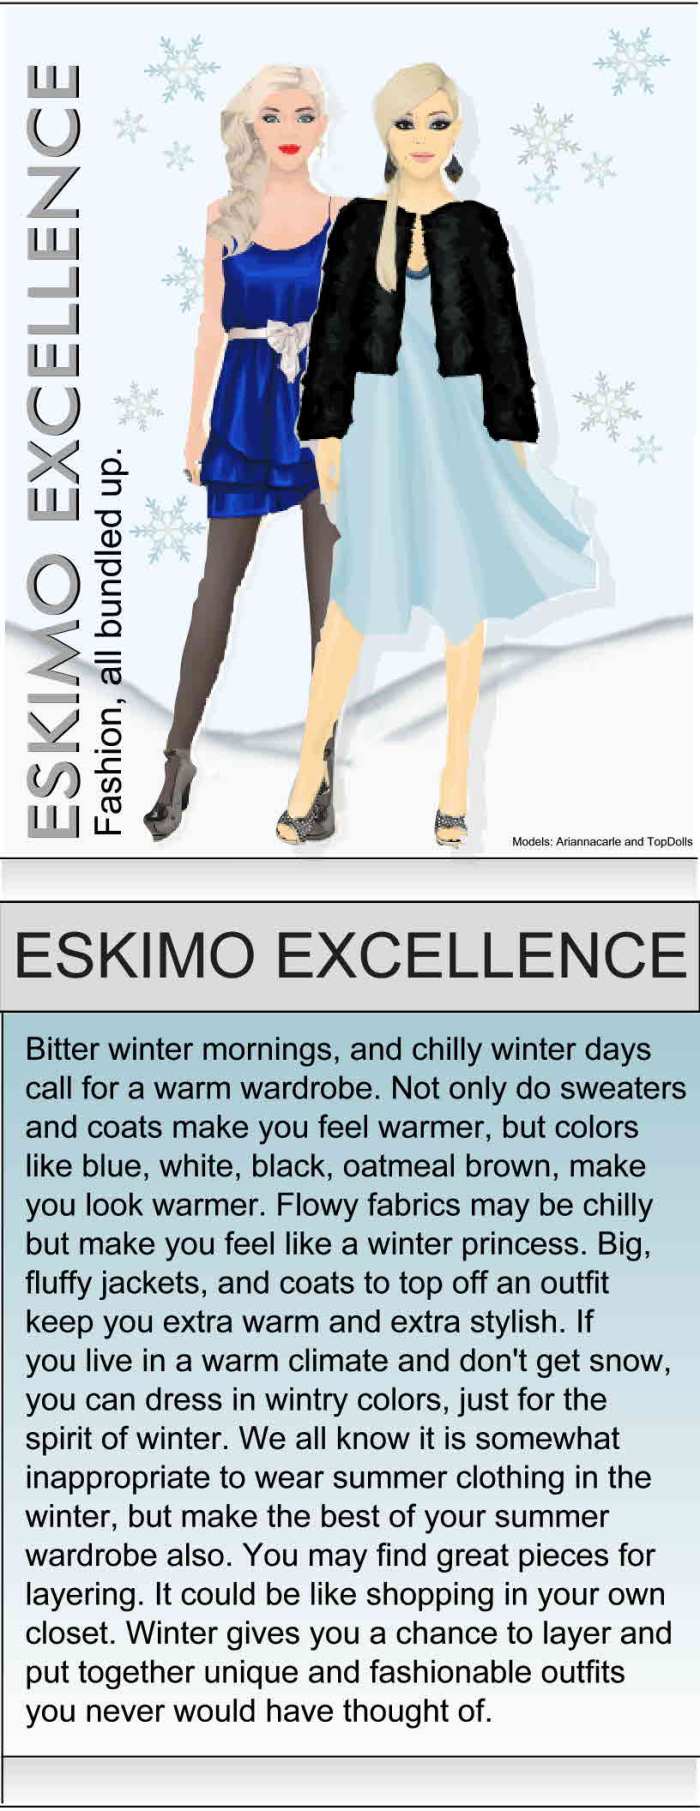 eskimo-excellence